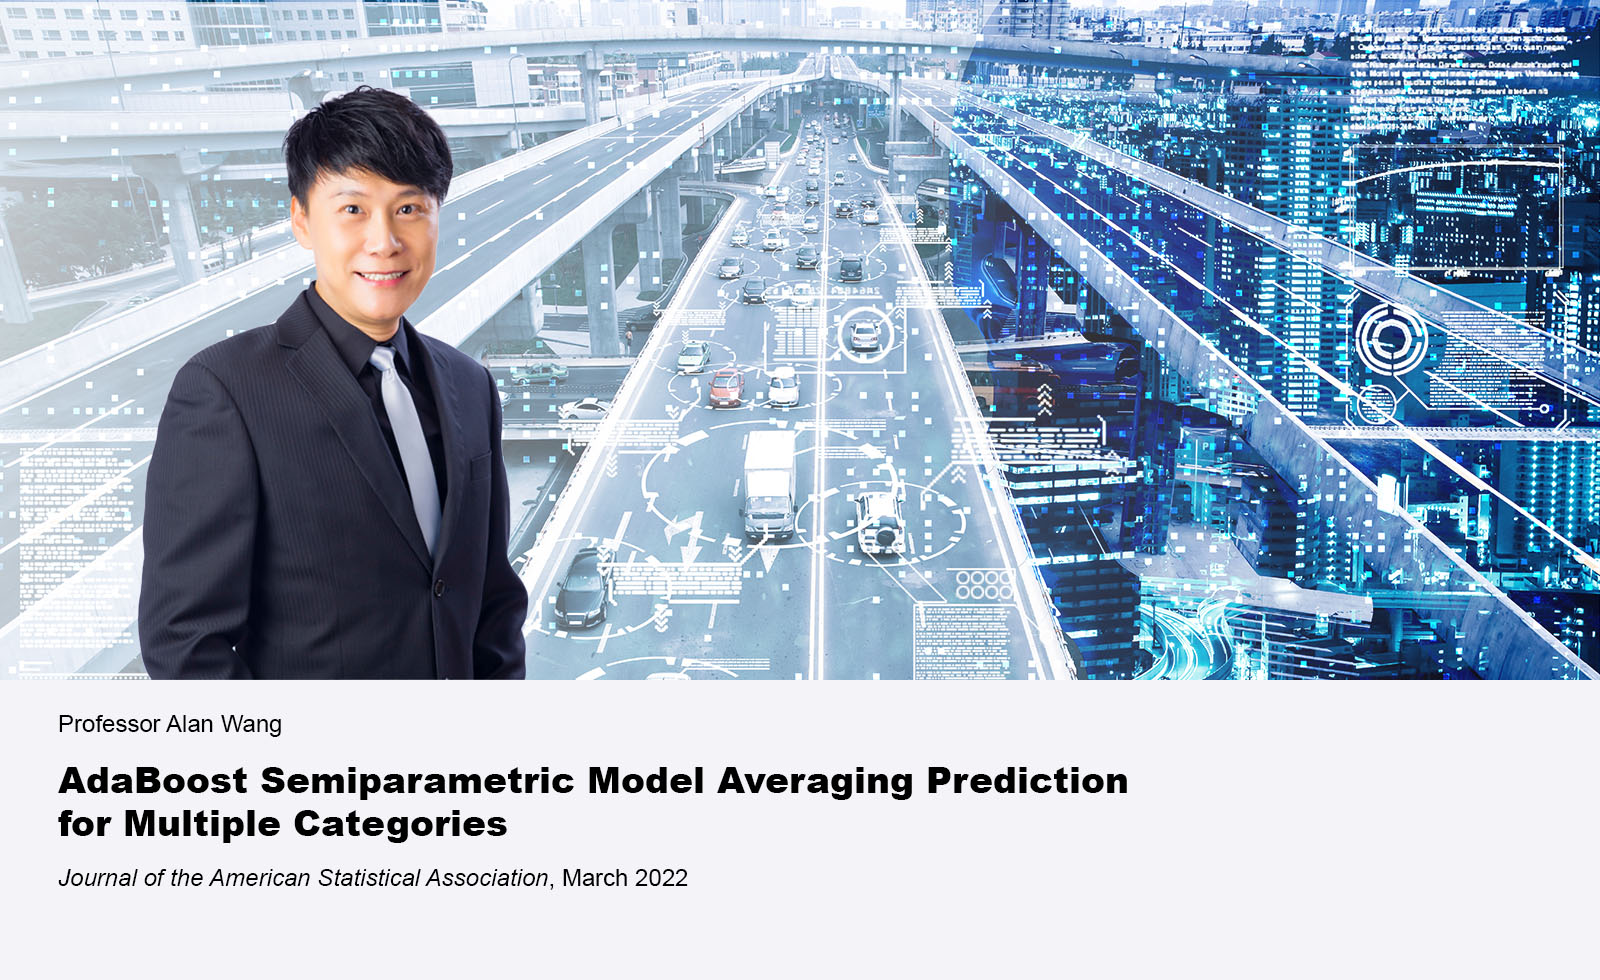 AdaBoost Semiparametric Model Averaging Prediction for Multiple Categories